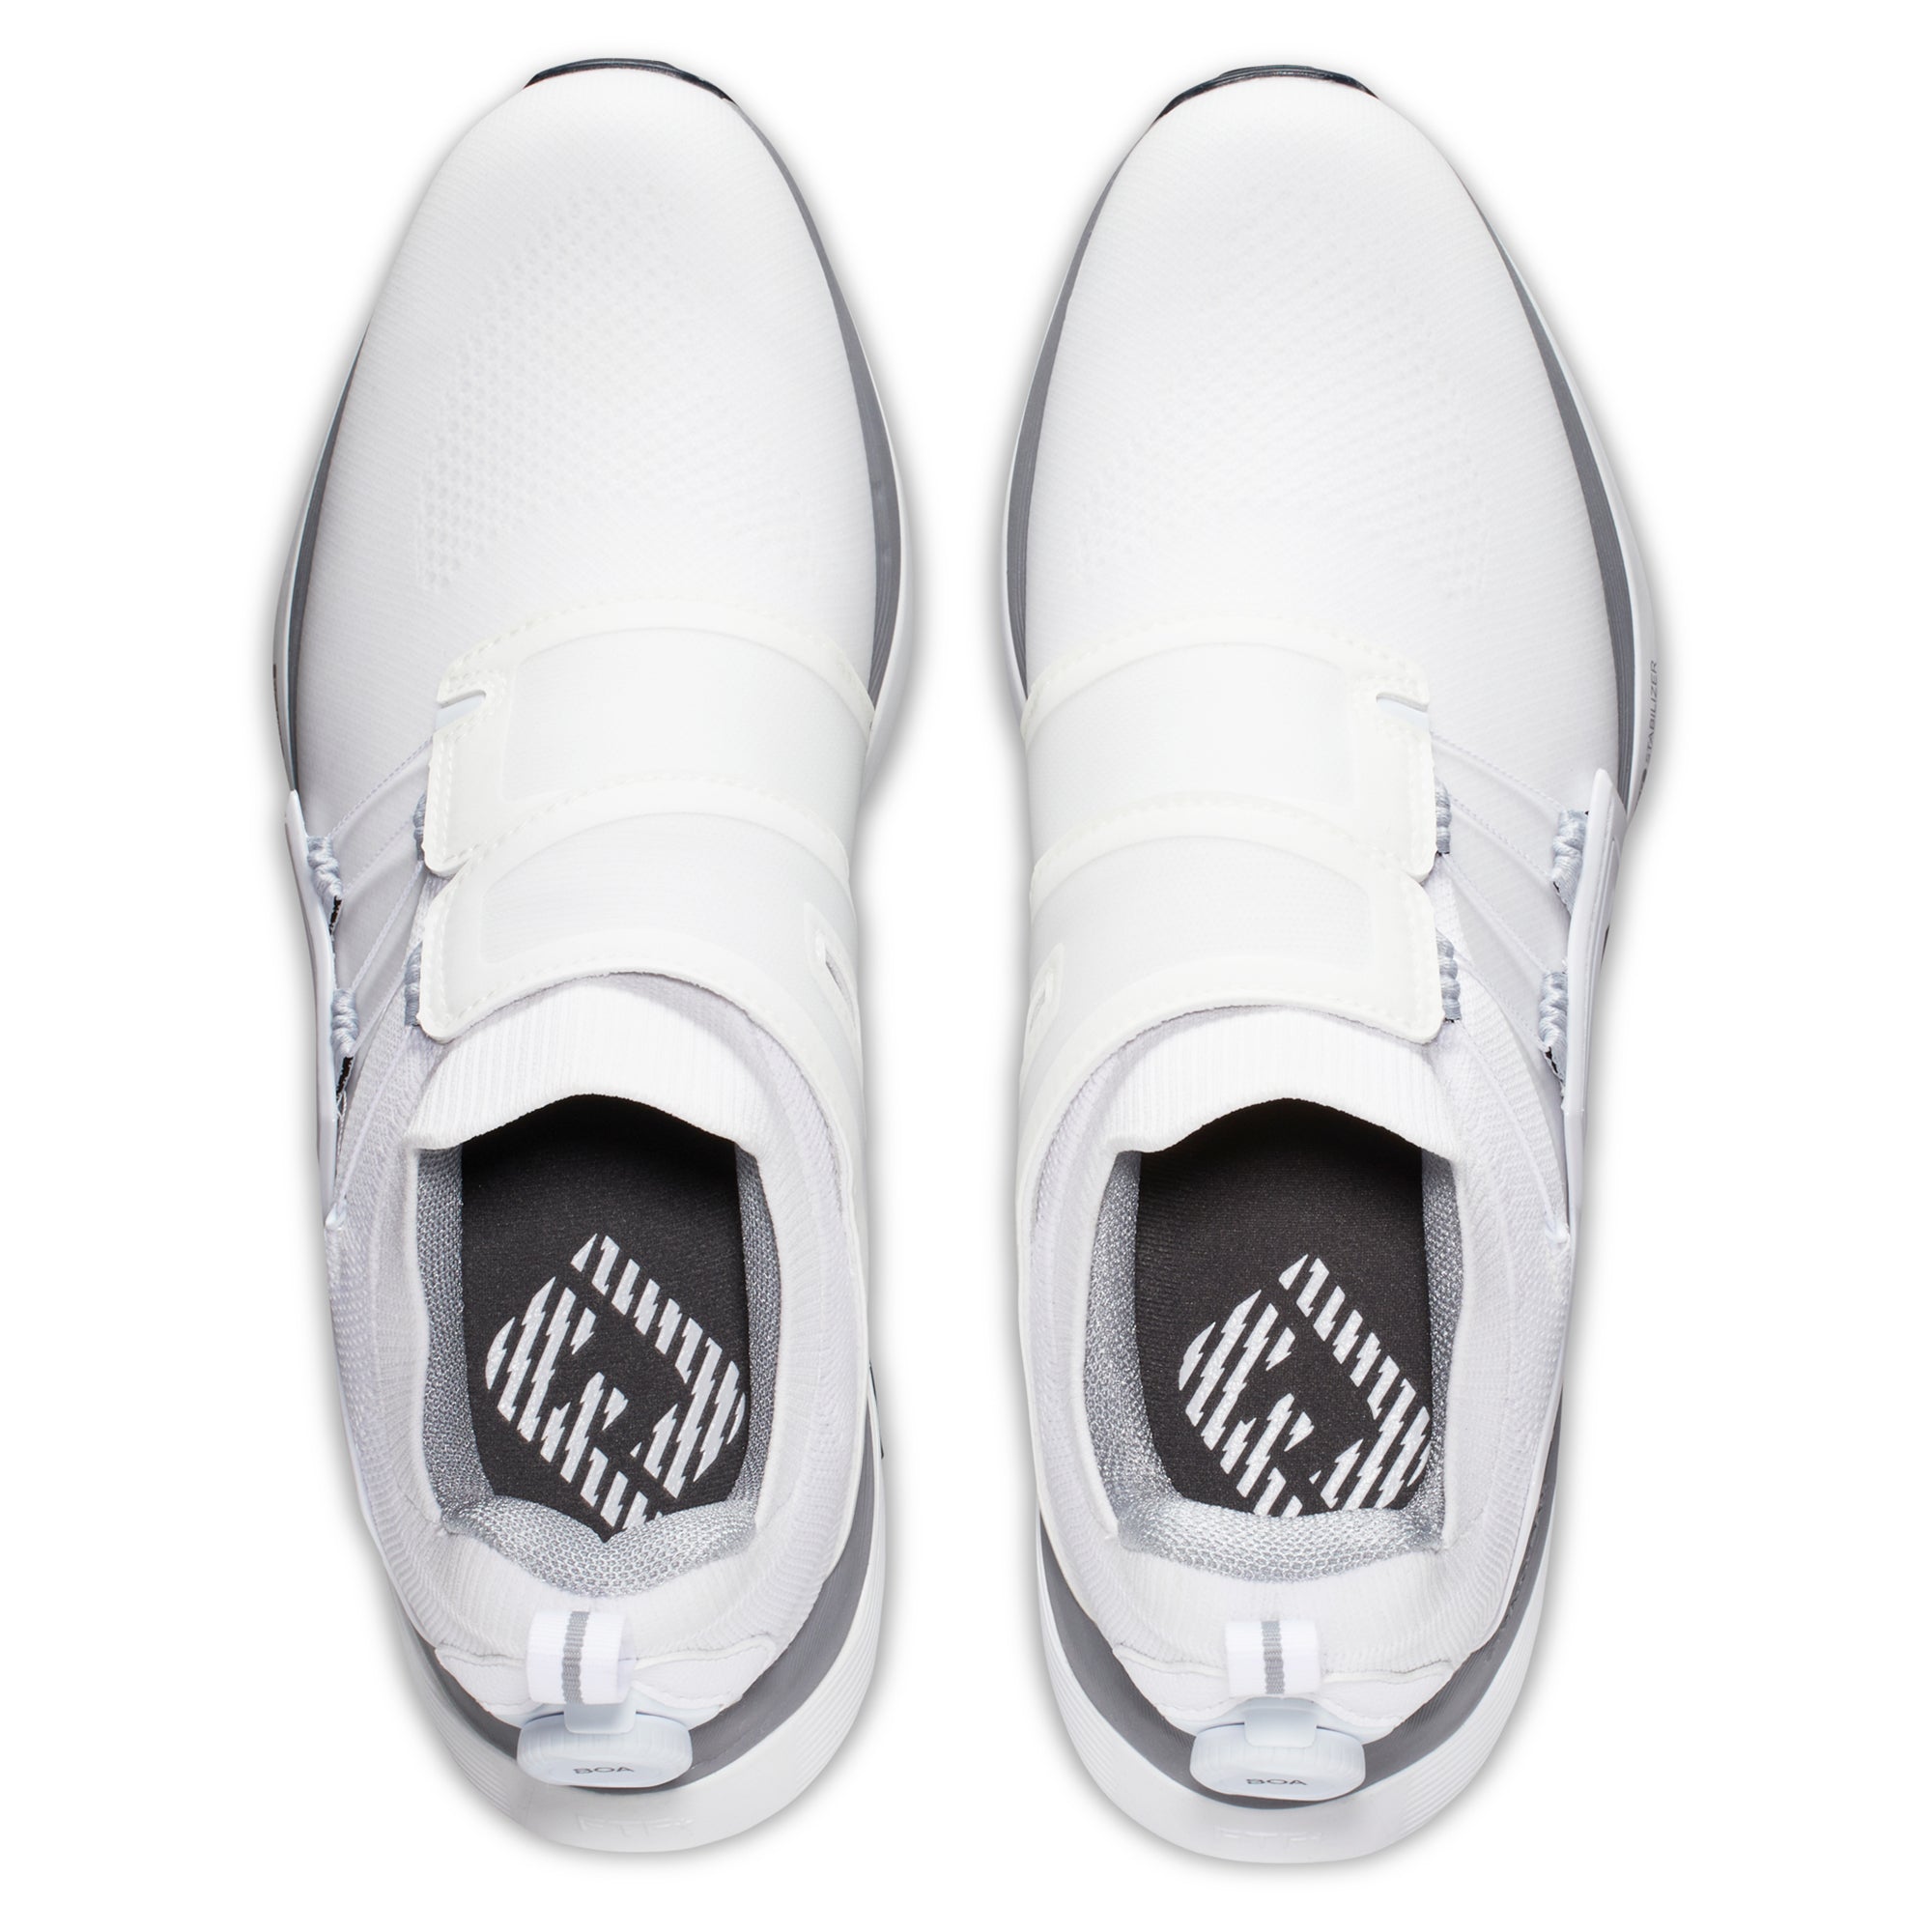 footjoy-hyperflex-boa-golf-shoes-51099-white-grey